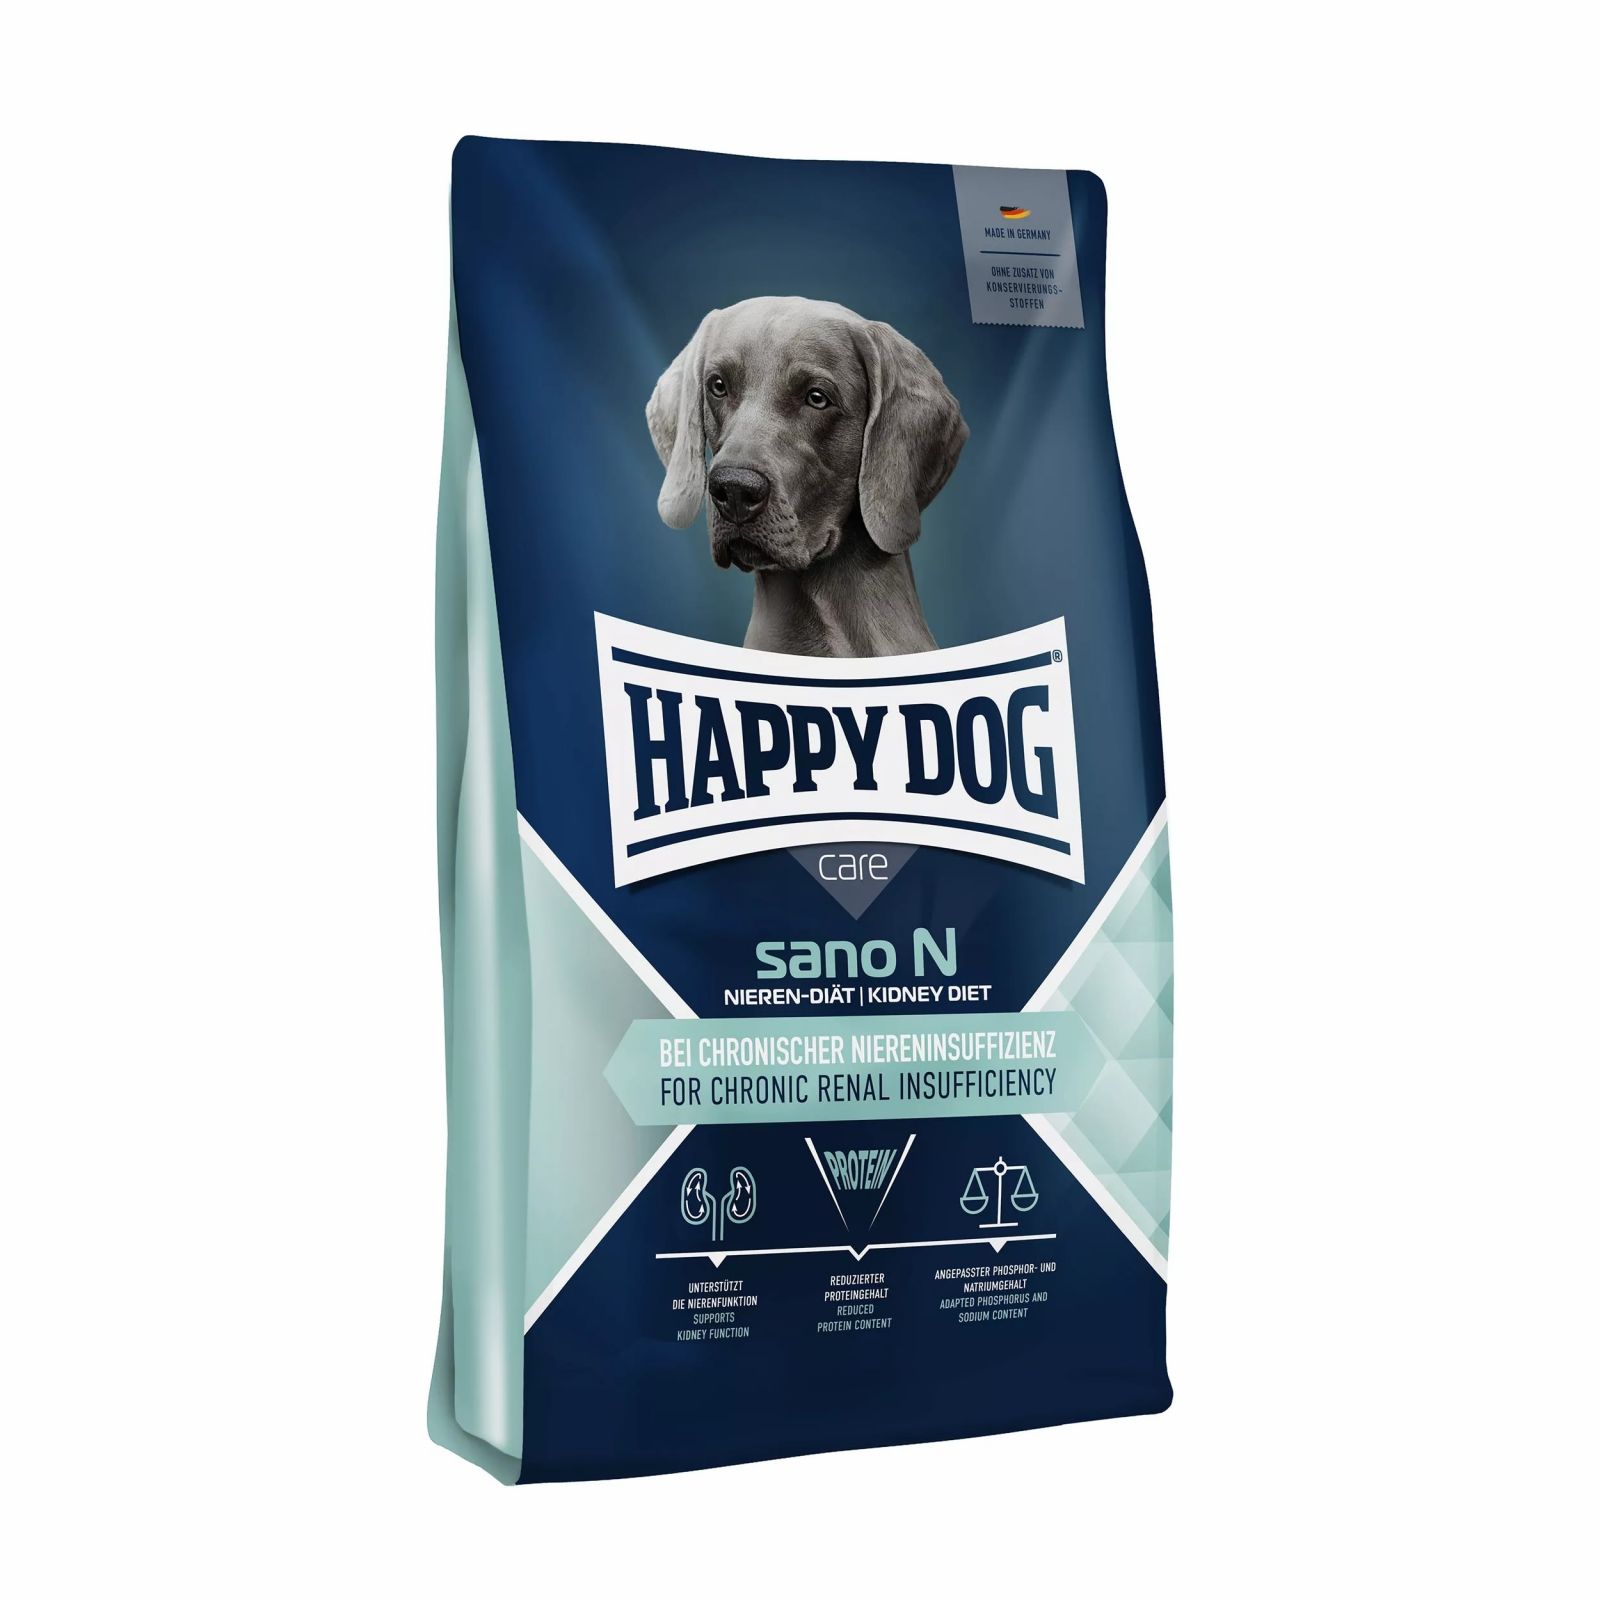 Happy Dog Care Sano N 2 x 7,5 kg Euroben